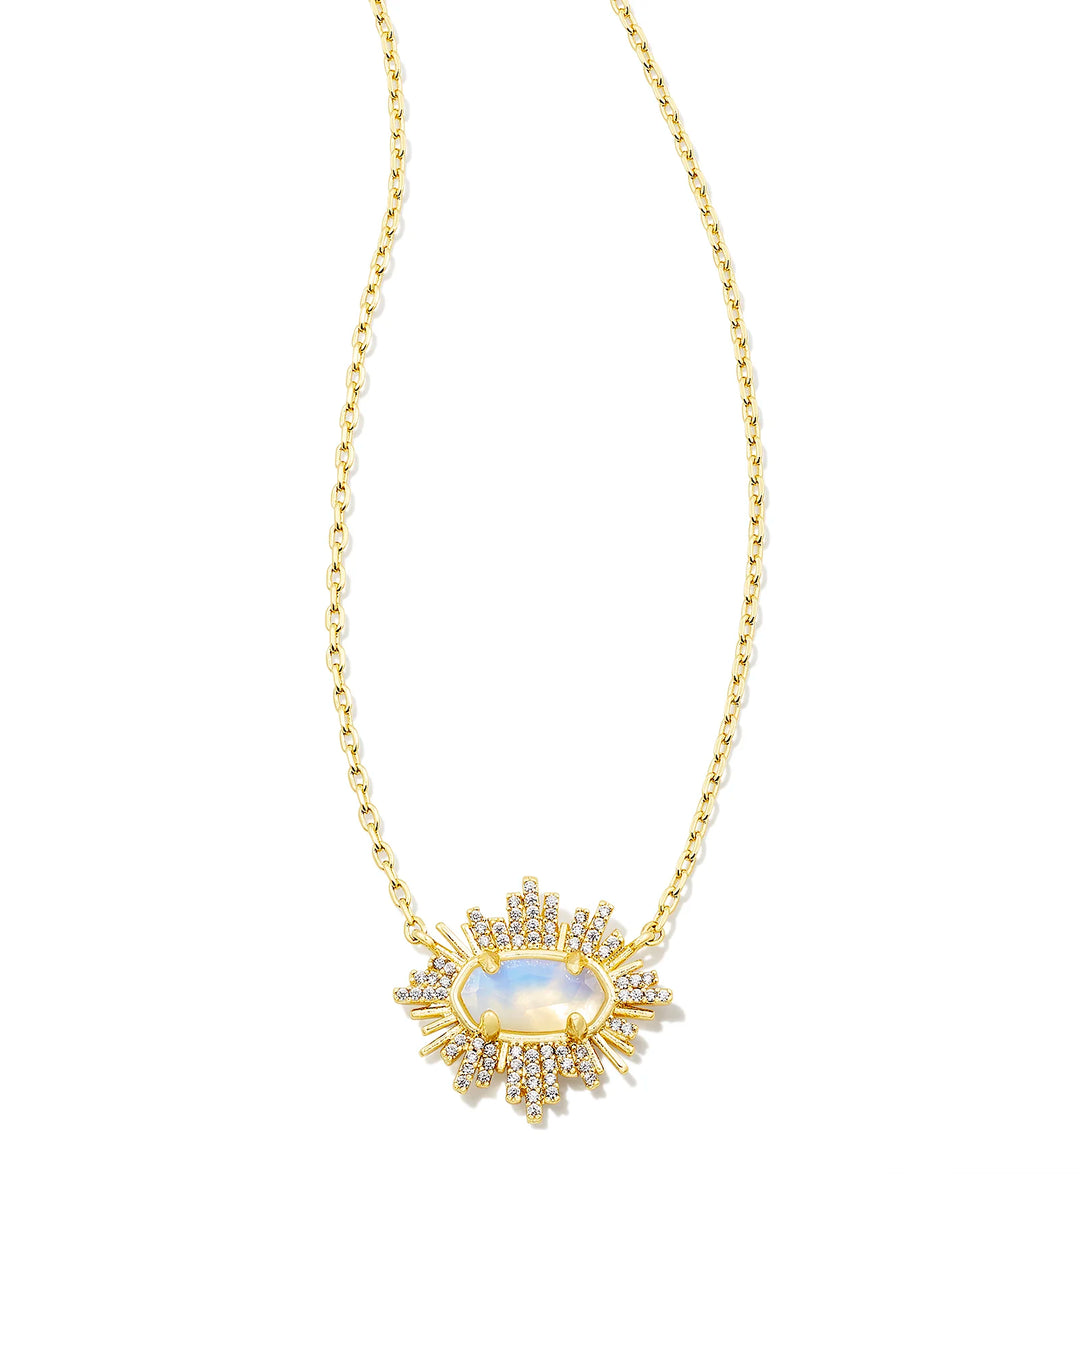 Kendra Scott Grayson Gold Sunburst Frame Short Pendant Necklace in Iridescent Opalite Illusion